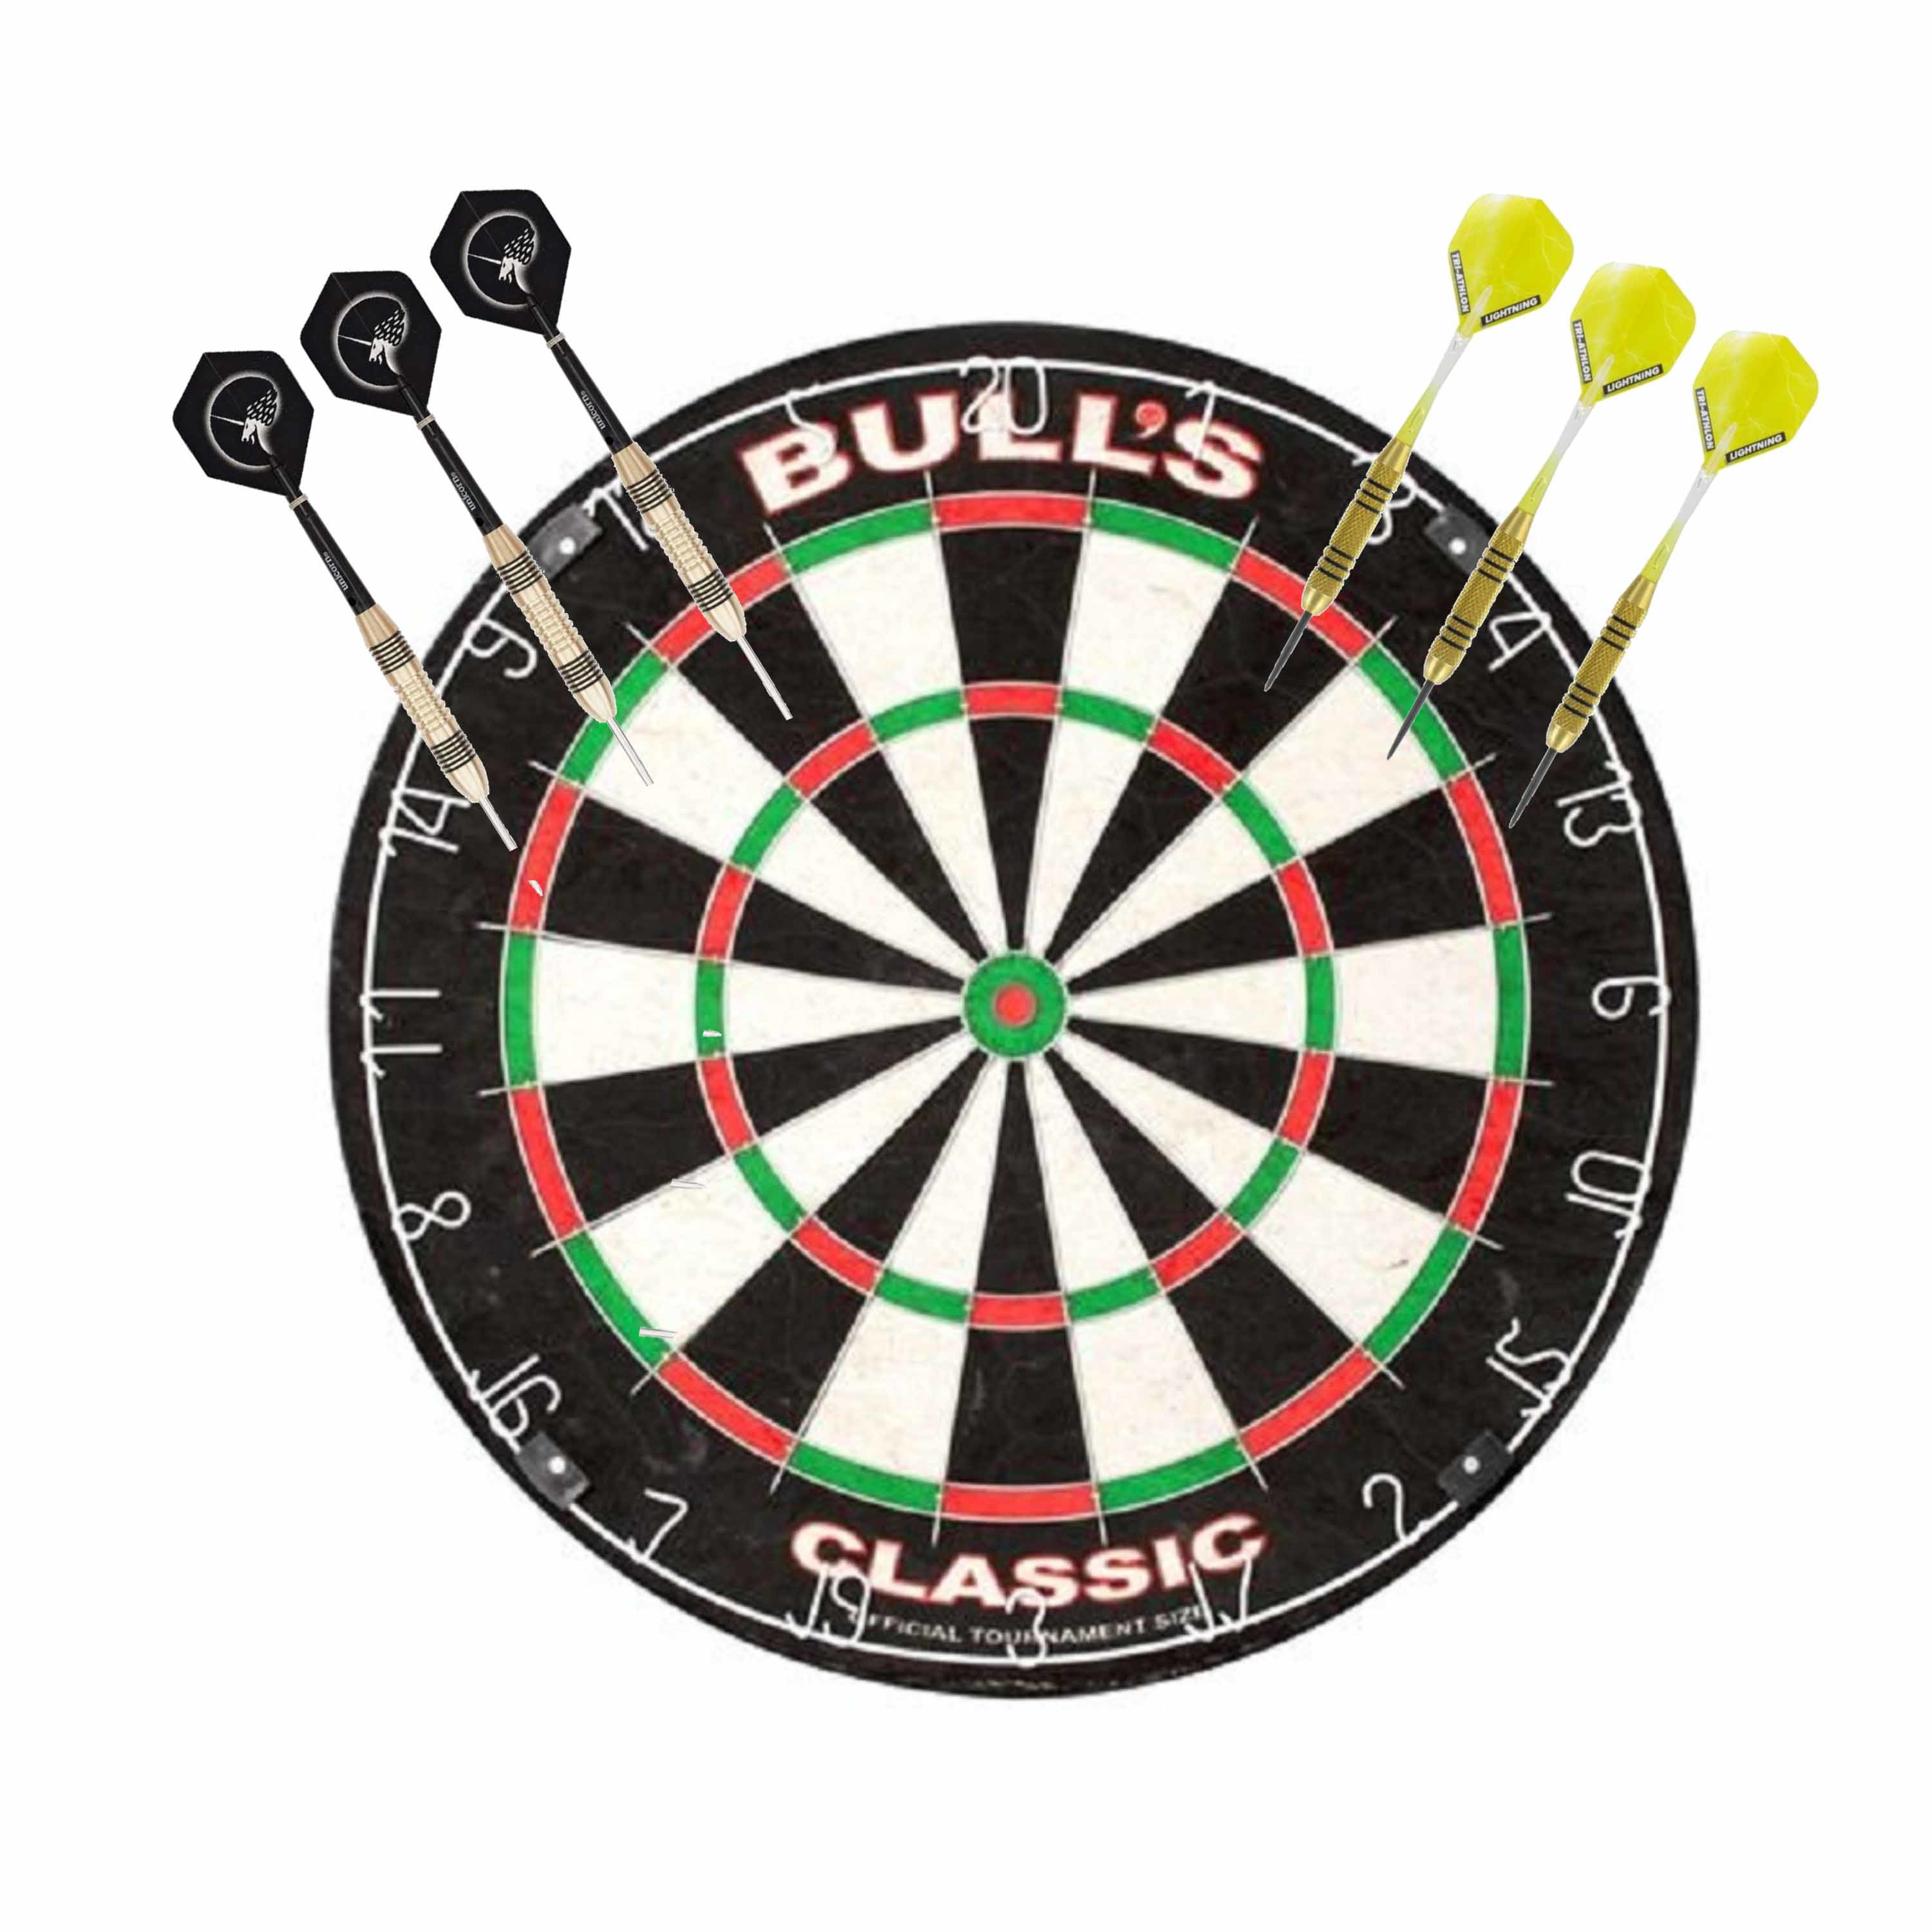 Bulls Classic dartbord set met 2 sets dartpijlen 23 grams